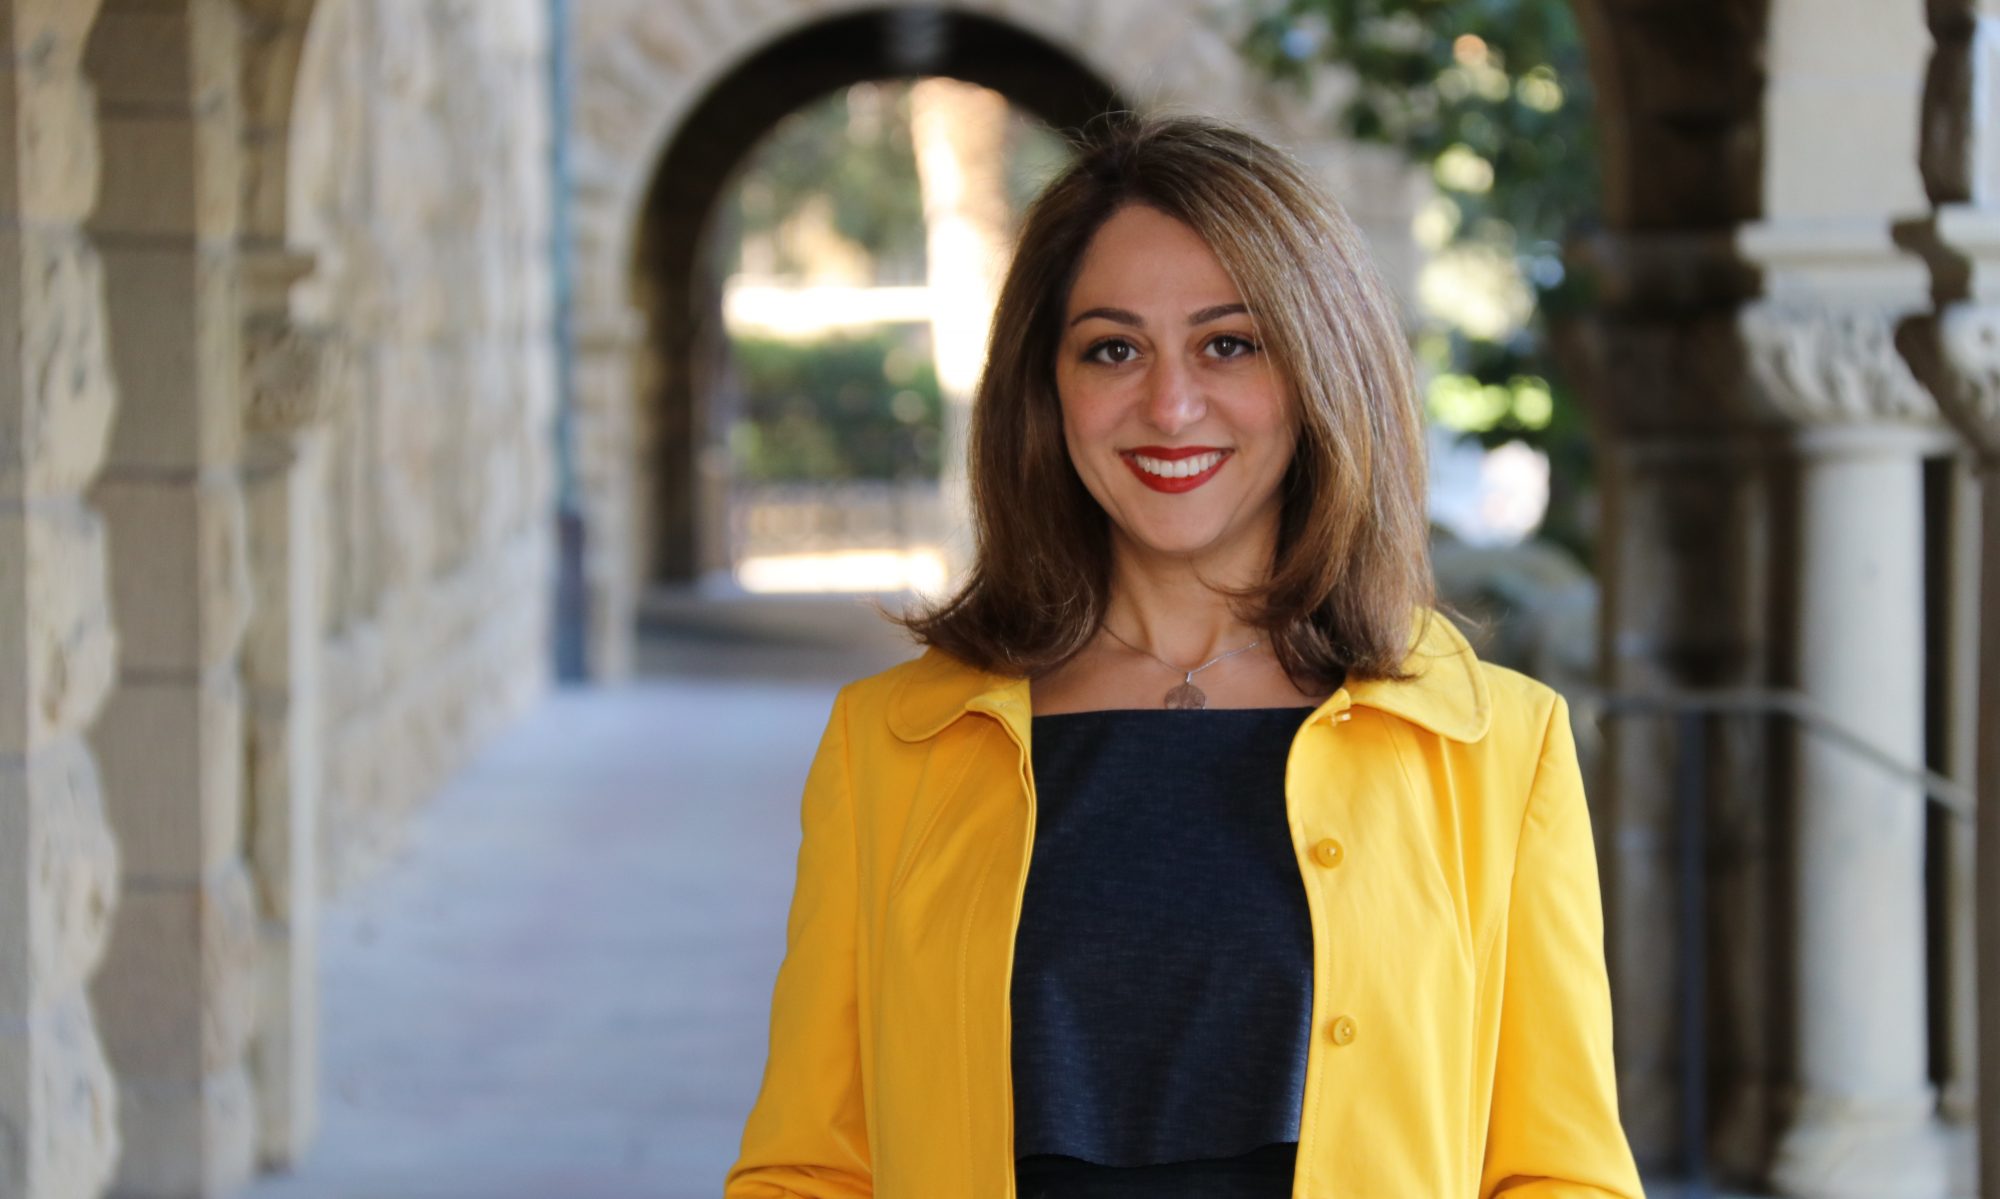 Dr. Sara Nasserzadeh